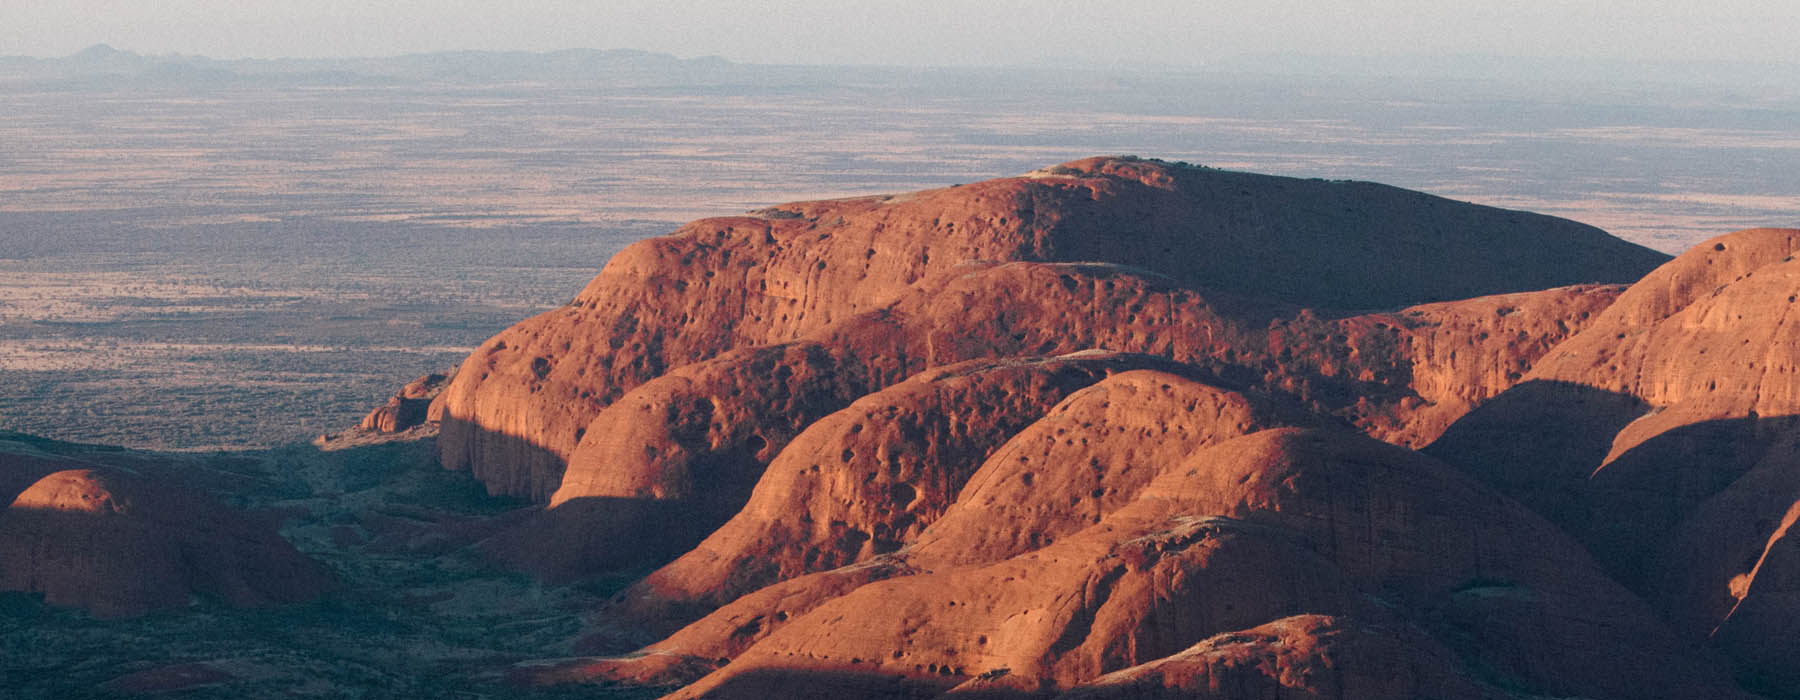 Uluru and the Northern Territory  <br class="hidden-md hidden-lg" /> Holidays